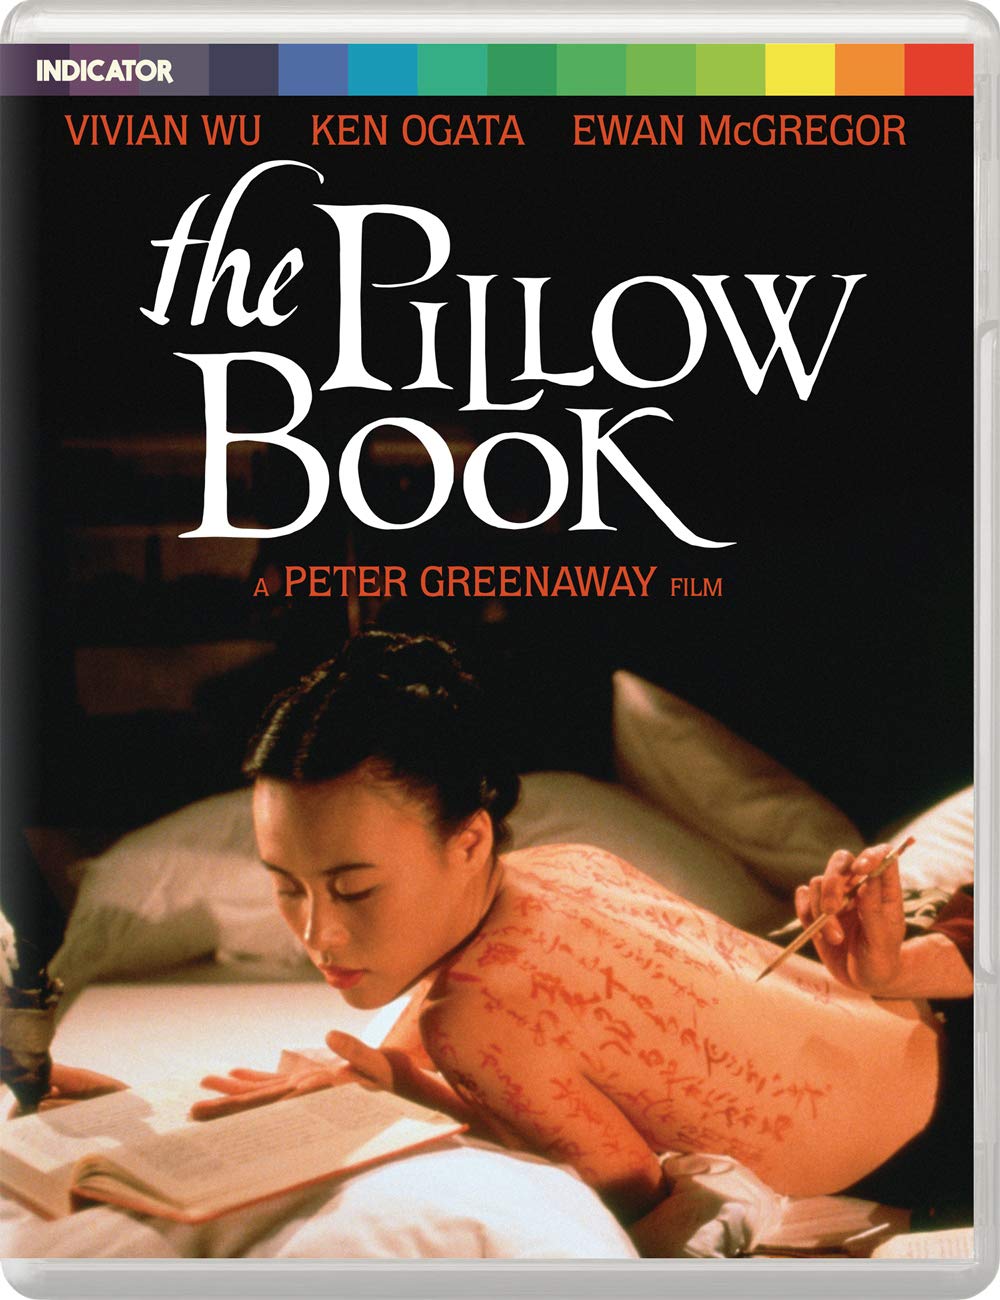 [枕边书].The.Pillow.Book.1996.GBR.BluRay.1080p.AVC.LPCM.2.0-CrsS     36.81G-3.jpg